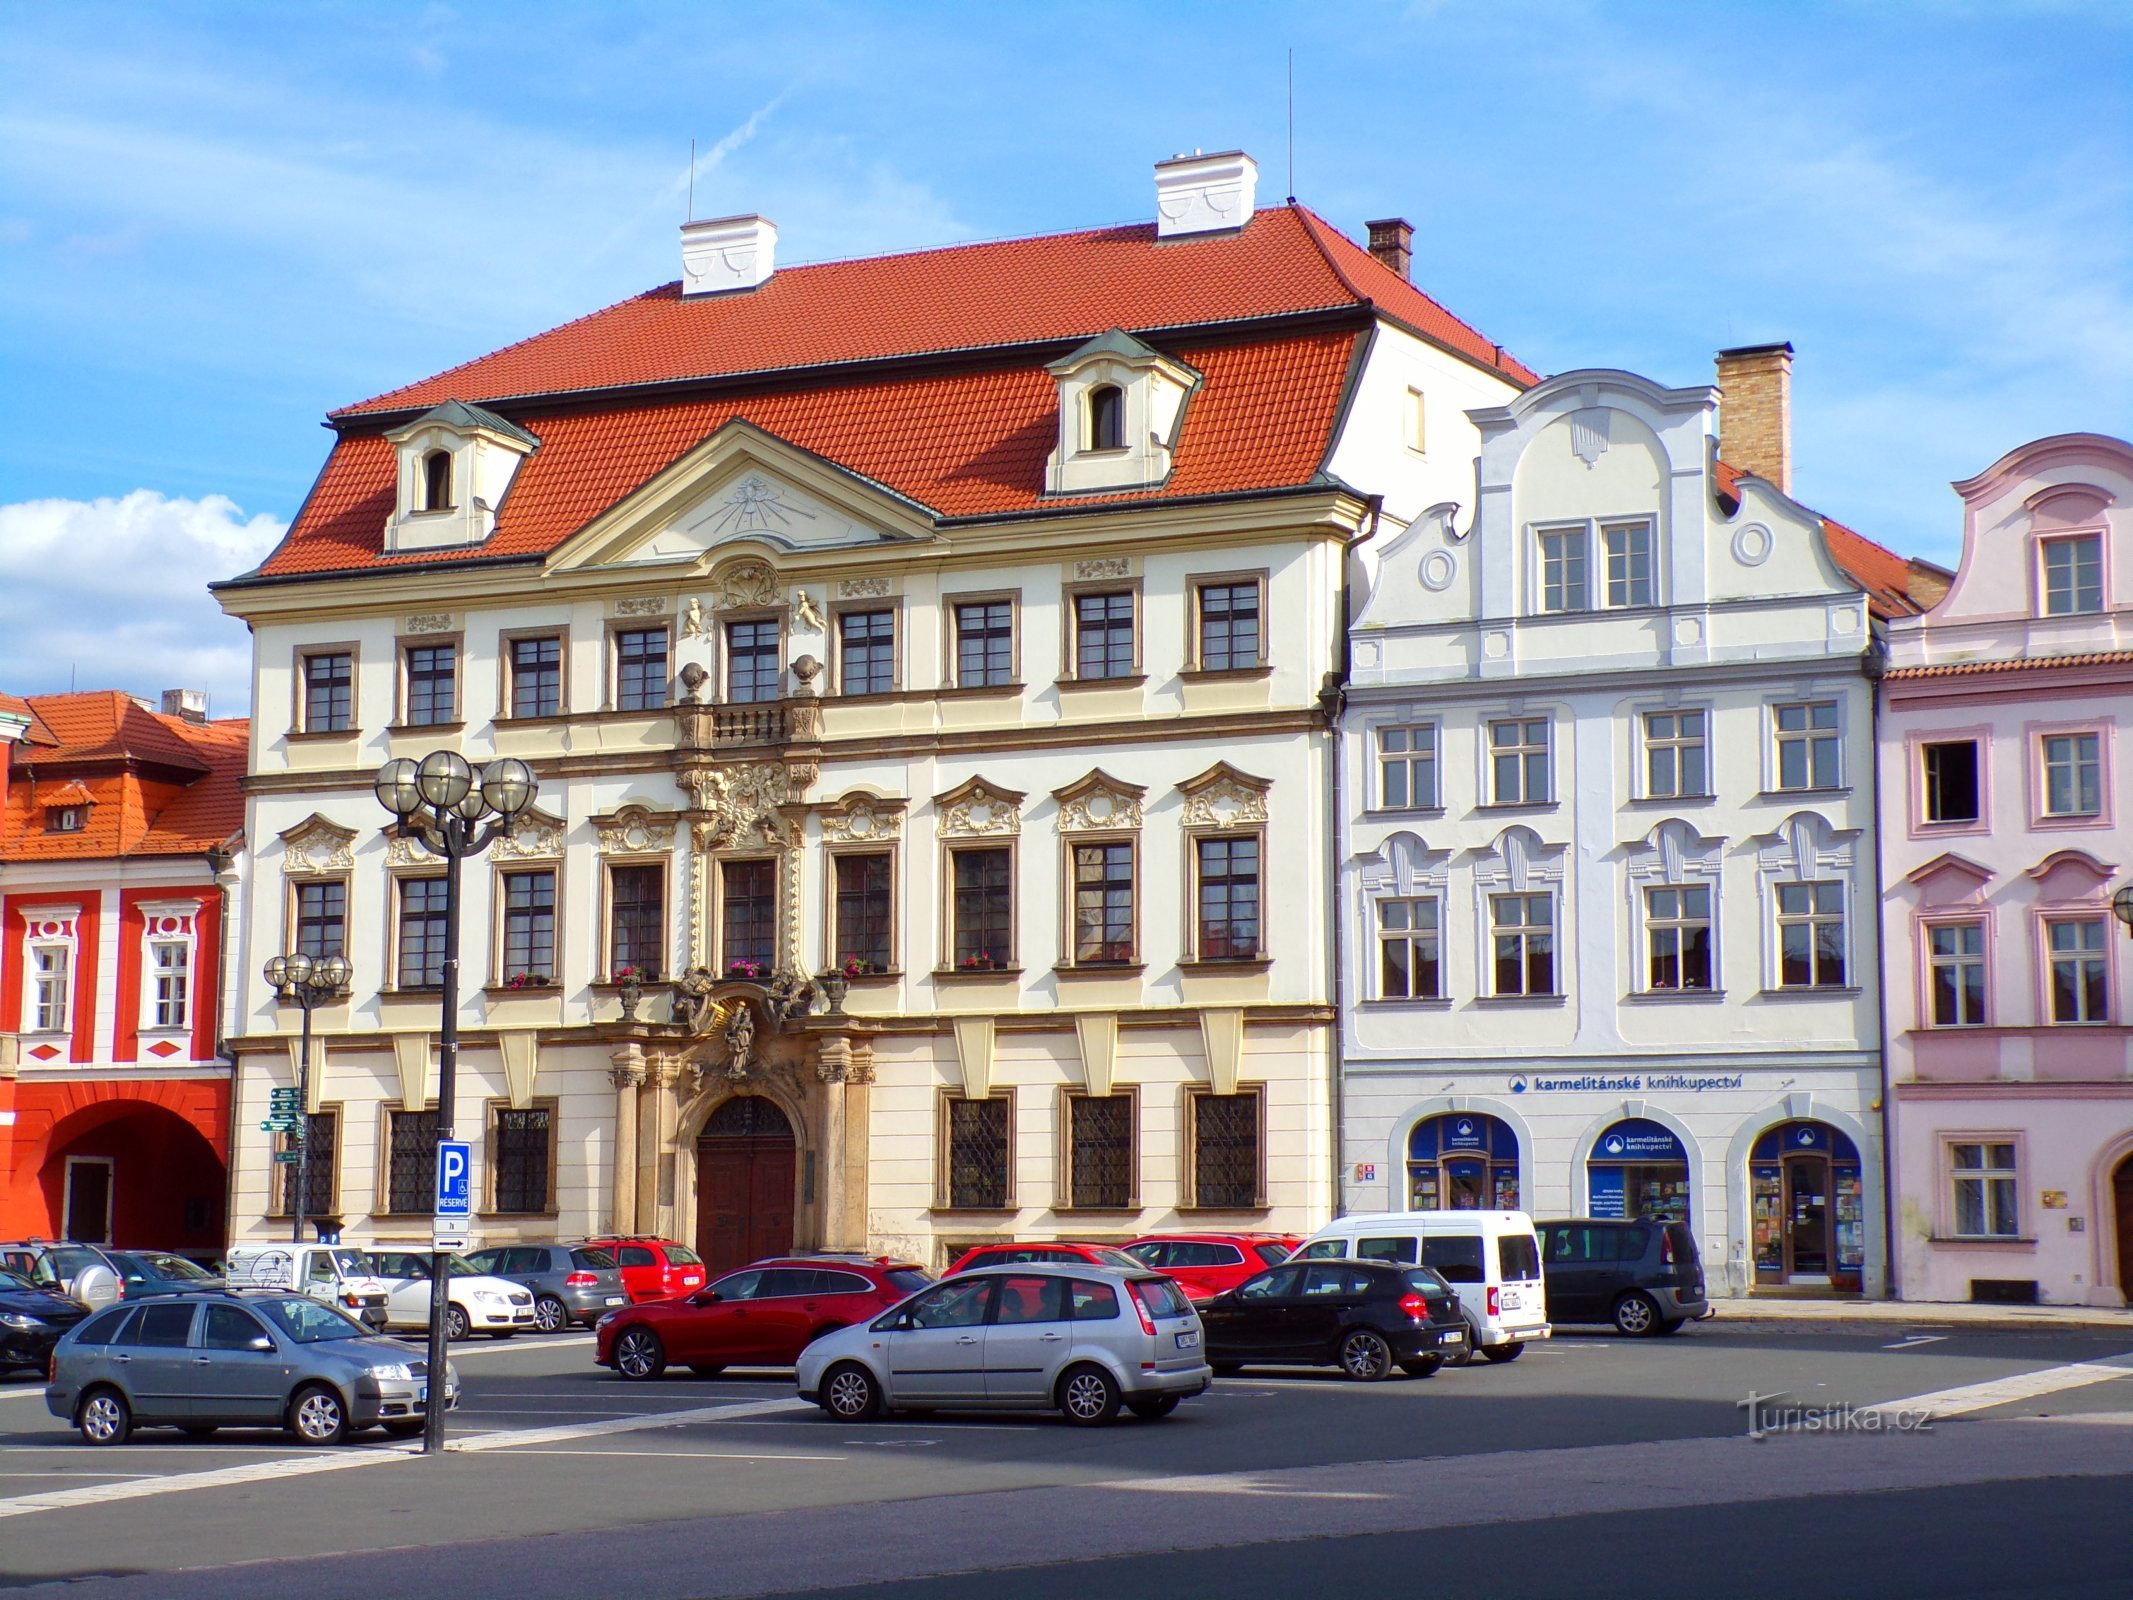 Velké náměstí n. 35-36 (Hradec Králové, 17.6.2022/XNUMX/XNUMX)